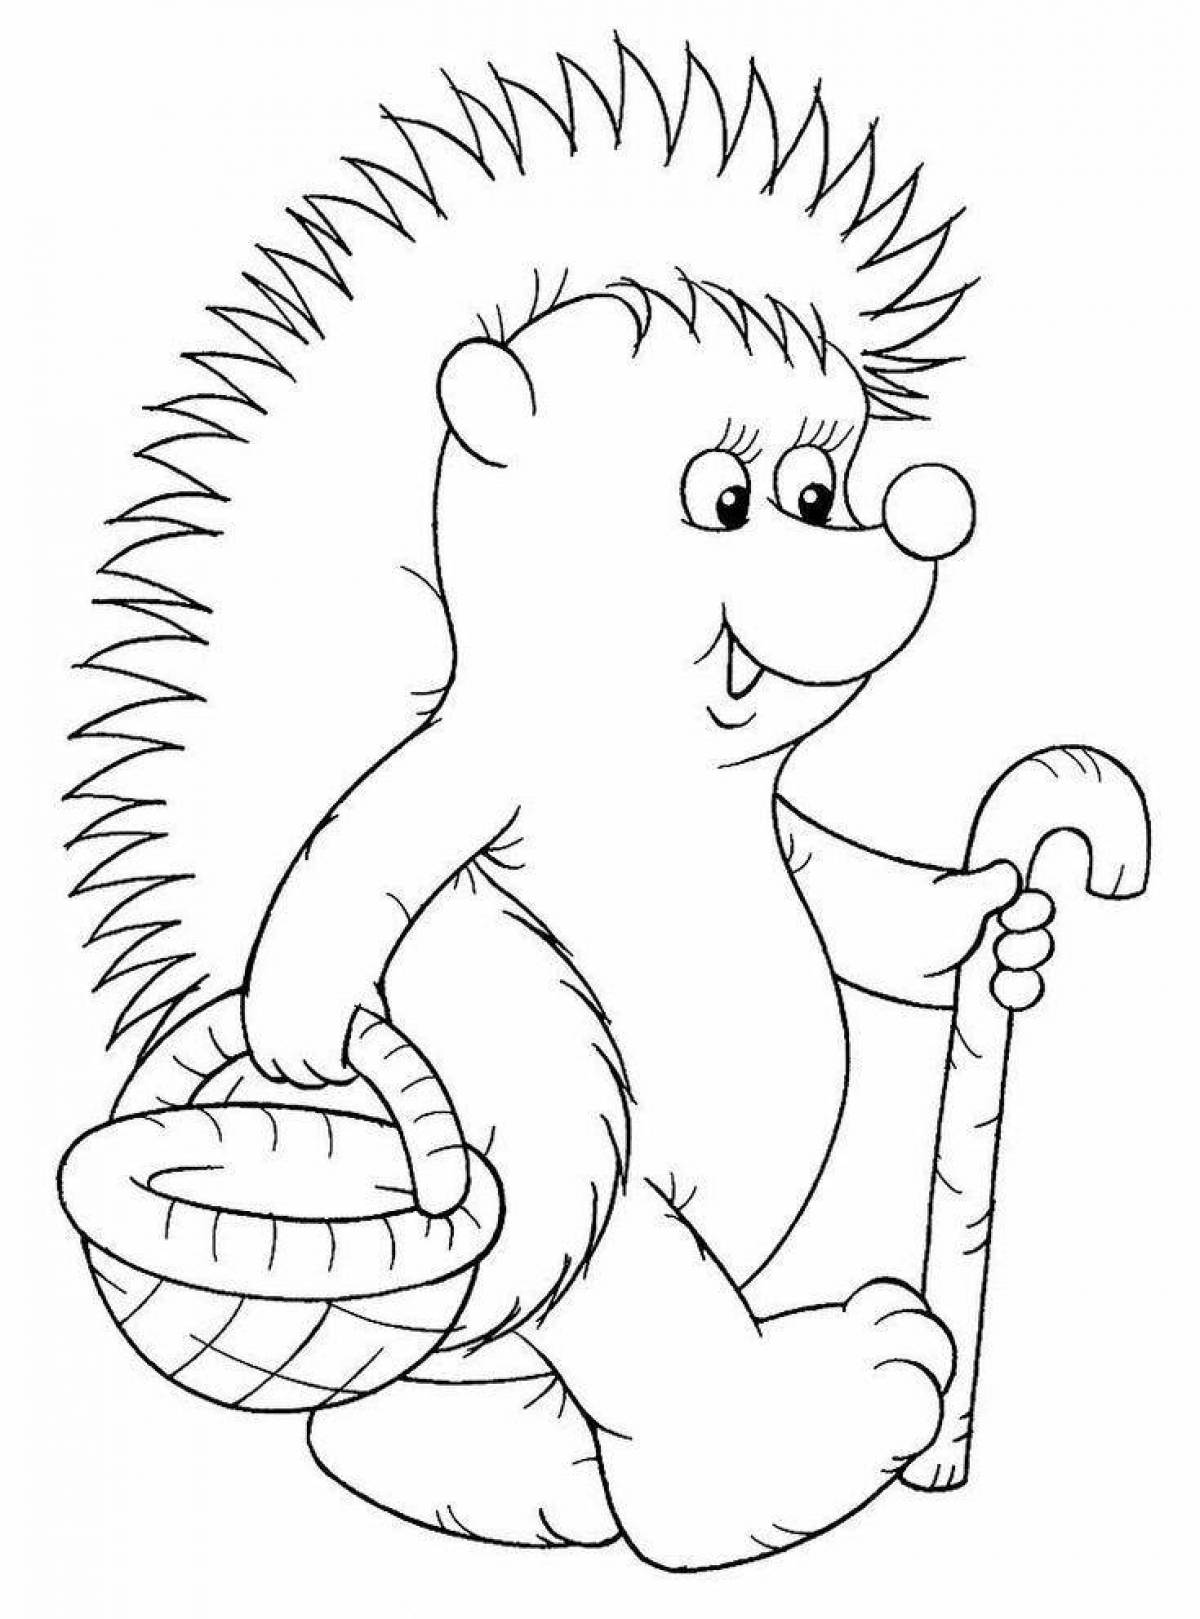 Creative hedgehog coloring book for kids